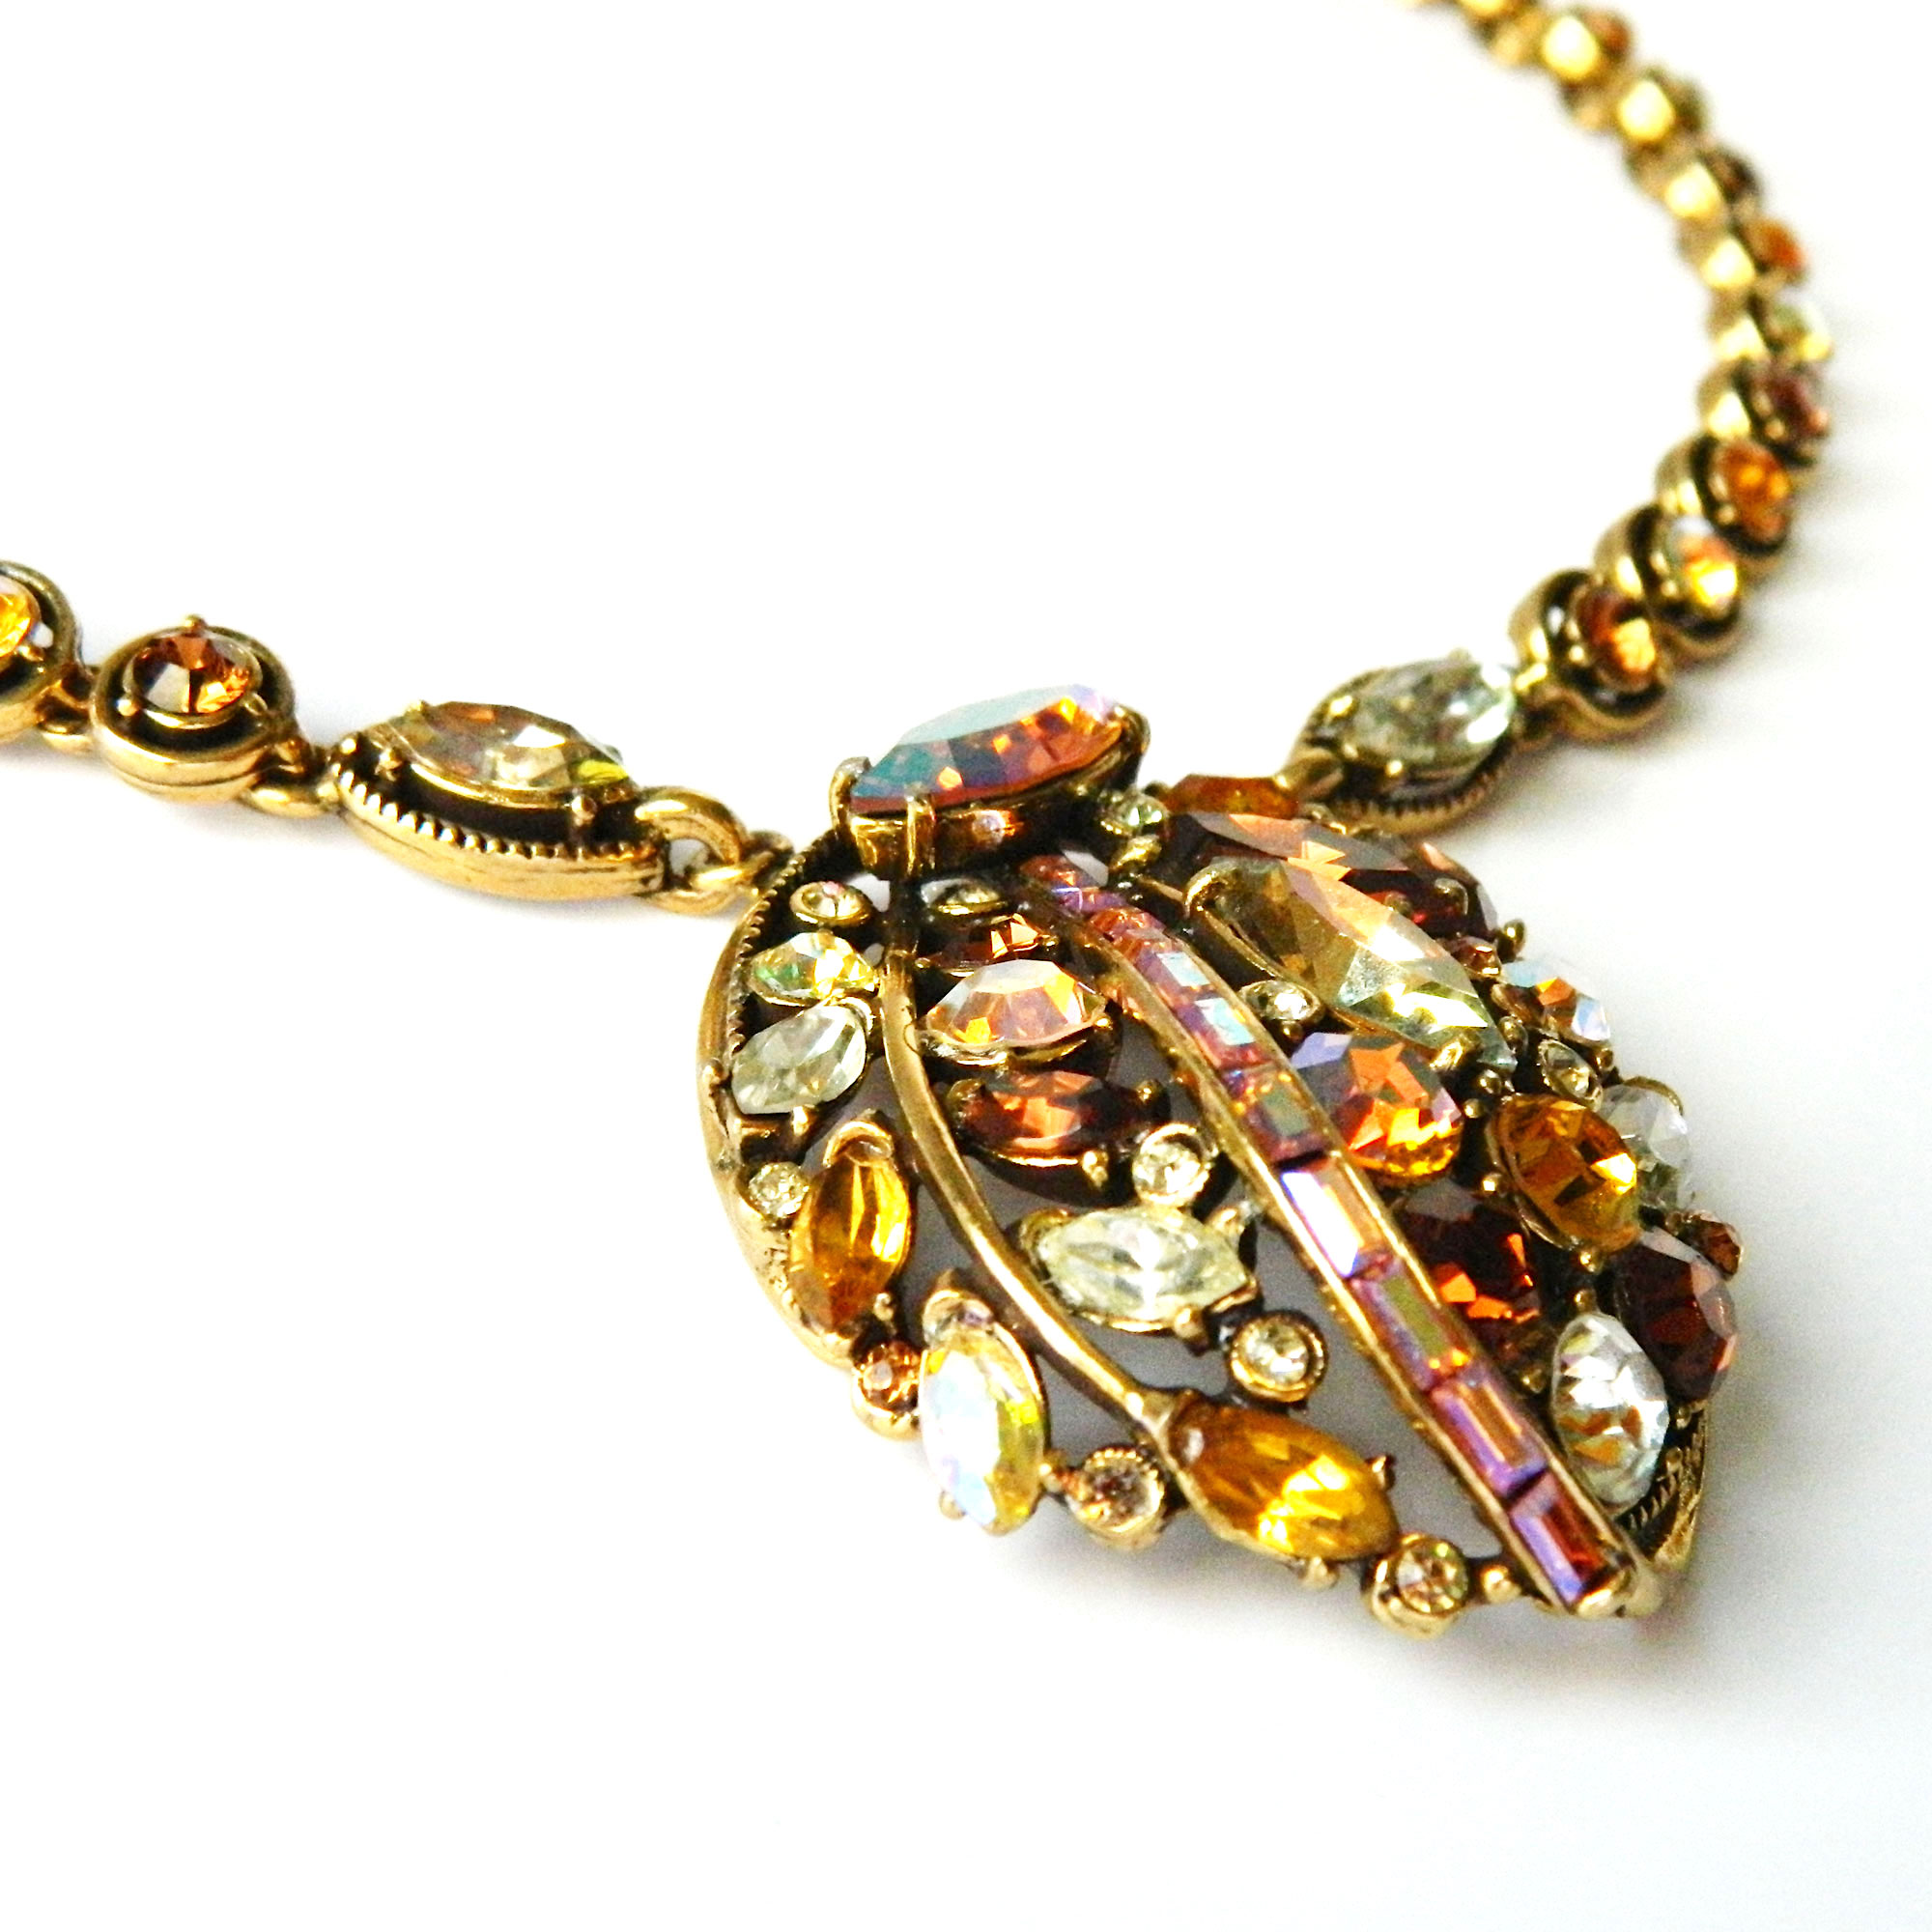 Hollycraft pendant necklace set